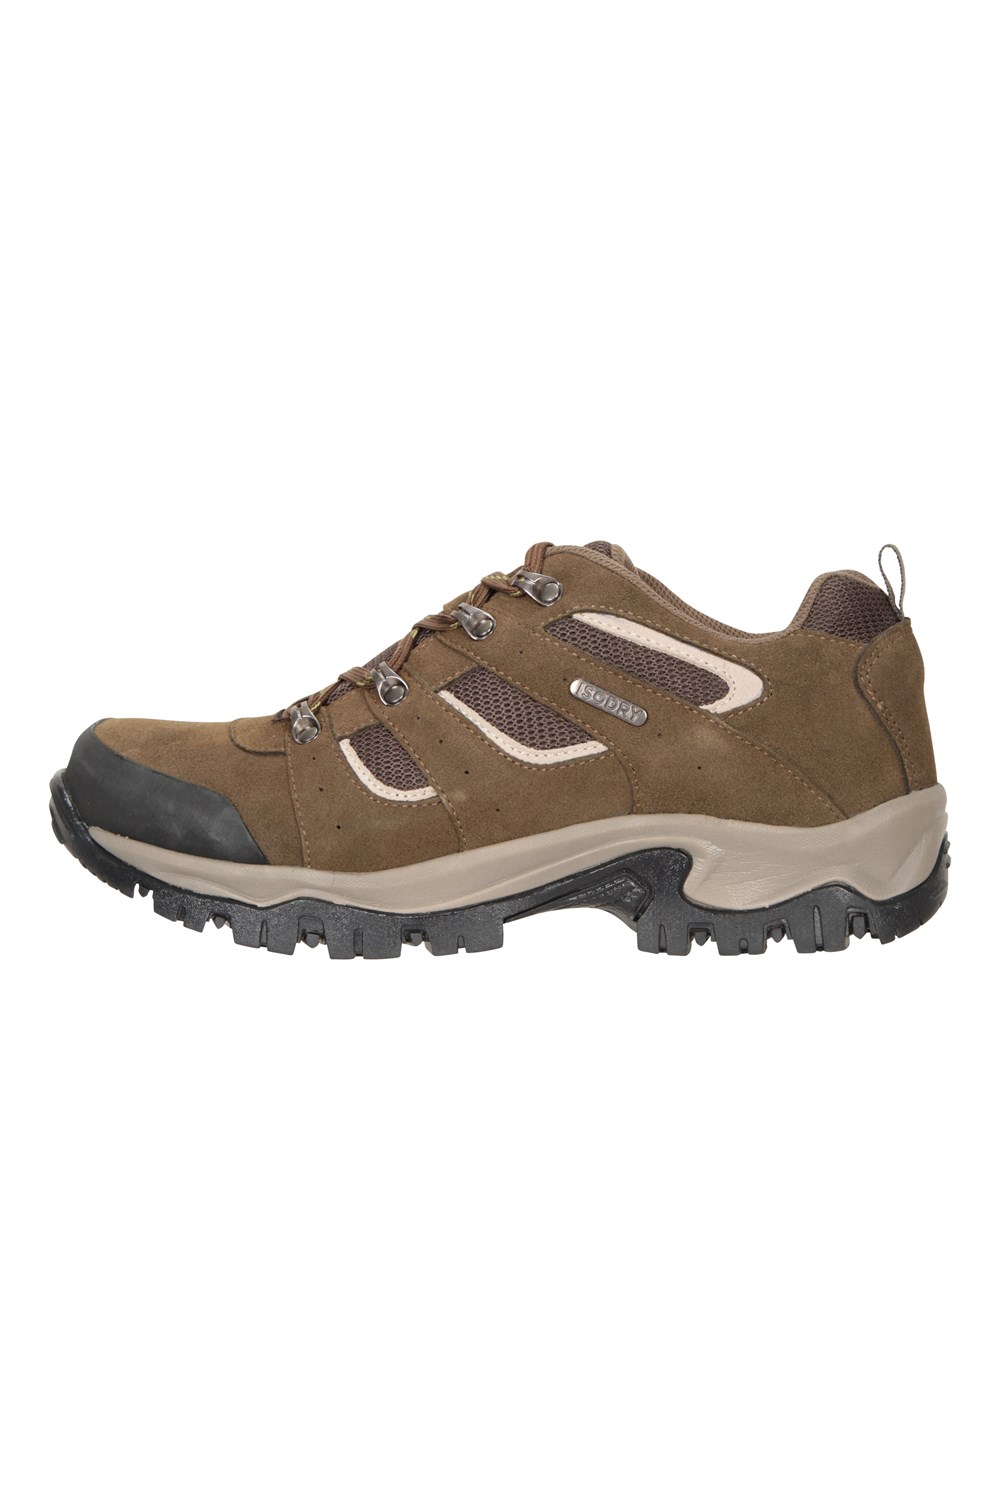 Mountain Warehouse Voyage Mens Waterproof Shoes - Hiking Walking Boots ...